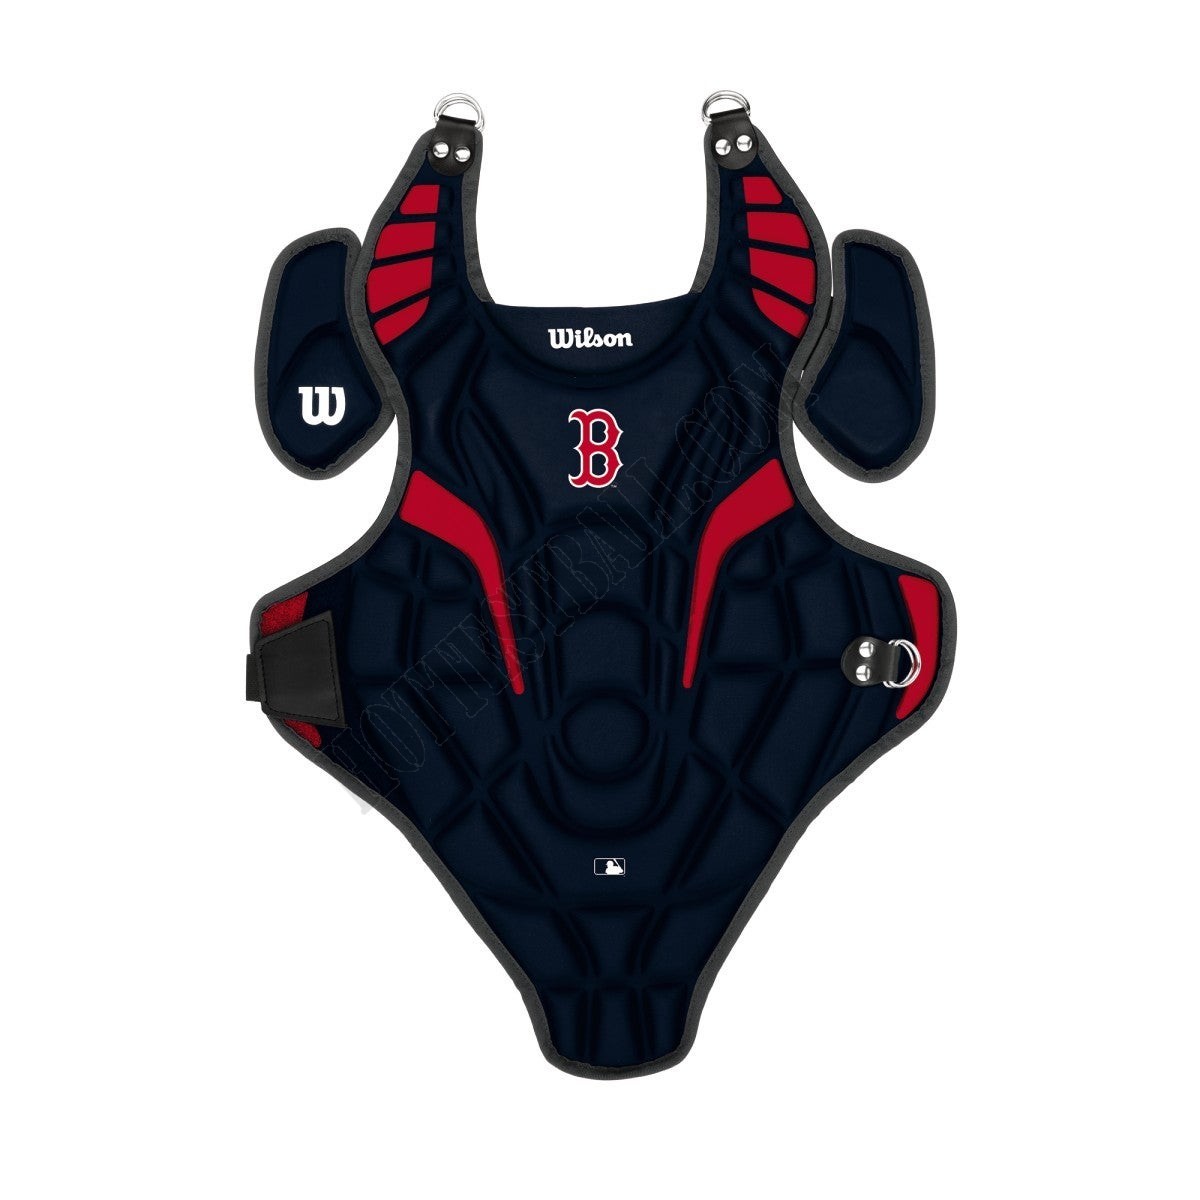 EZ Gear Catcher's Kit - Boston Red Sox - Wilson Discount Store - EZ Gear Catcher's Kit - Boston Red Sox - Wilson Discount Store